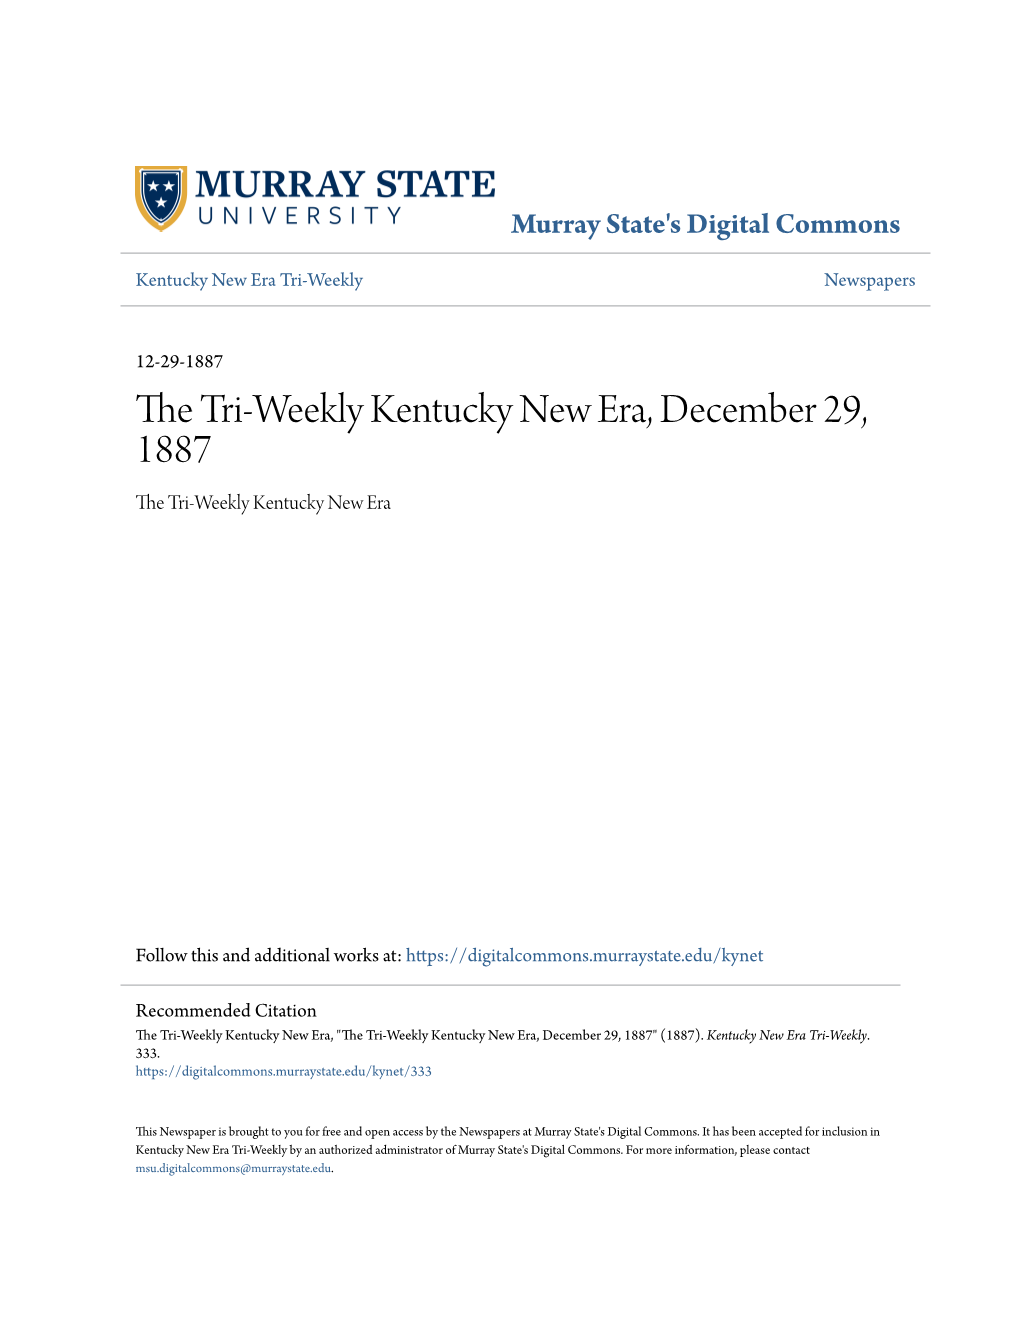 The Tri-Weekly Kentucky New Era, December 29, 1887